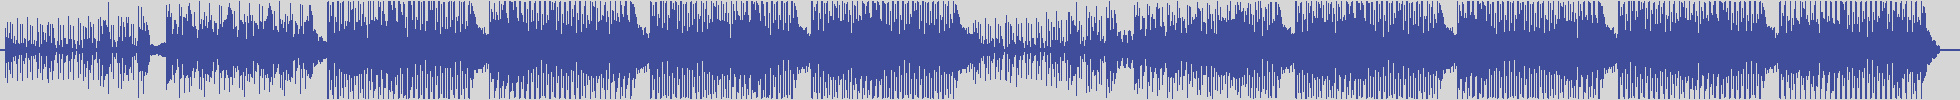 nf_boyz_records [NFY066] Anthony Kaiman - Shadow Man [Fluttuant Mix] audio wave form